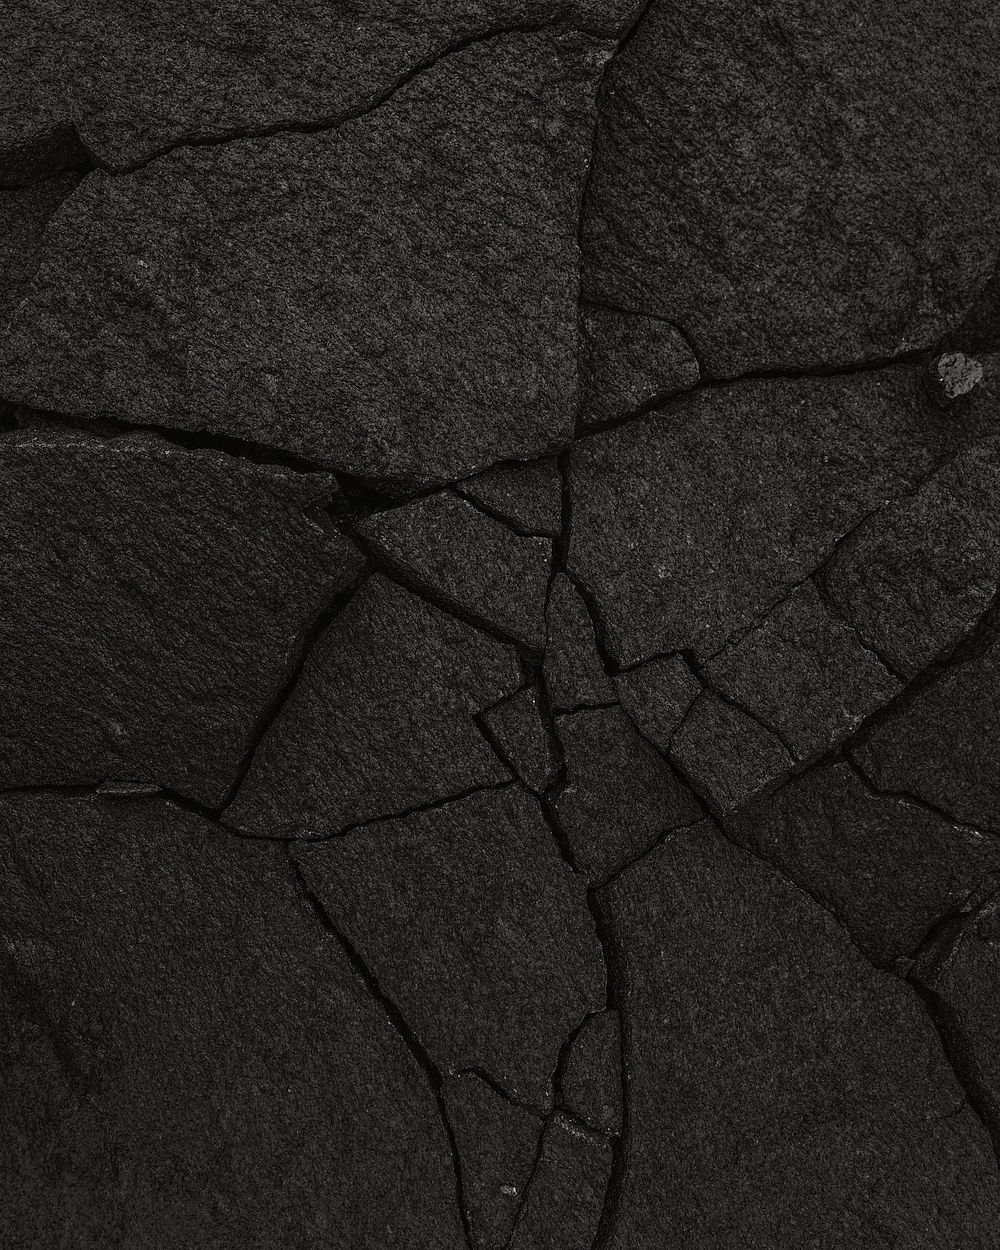 Cracked black concrete texture background